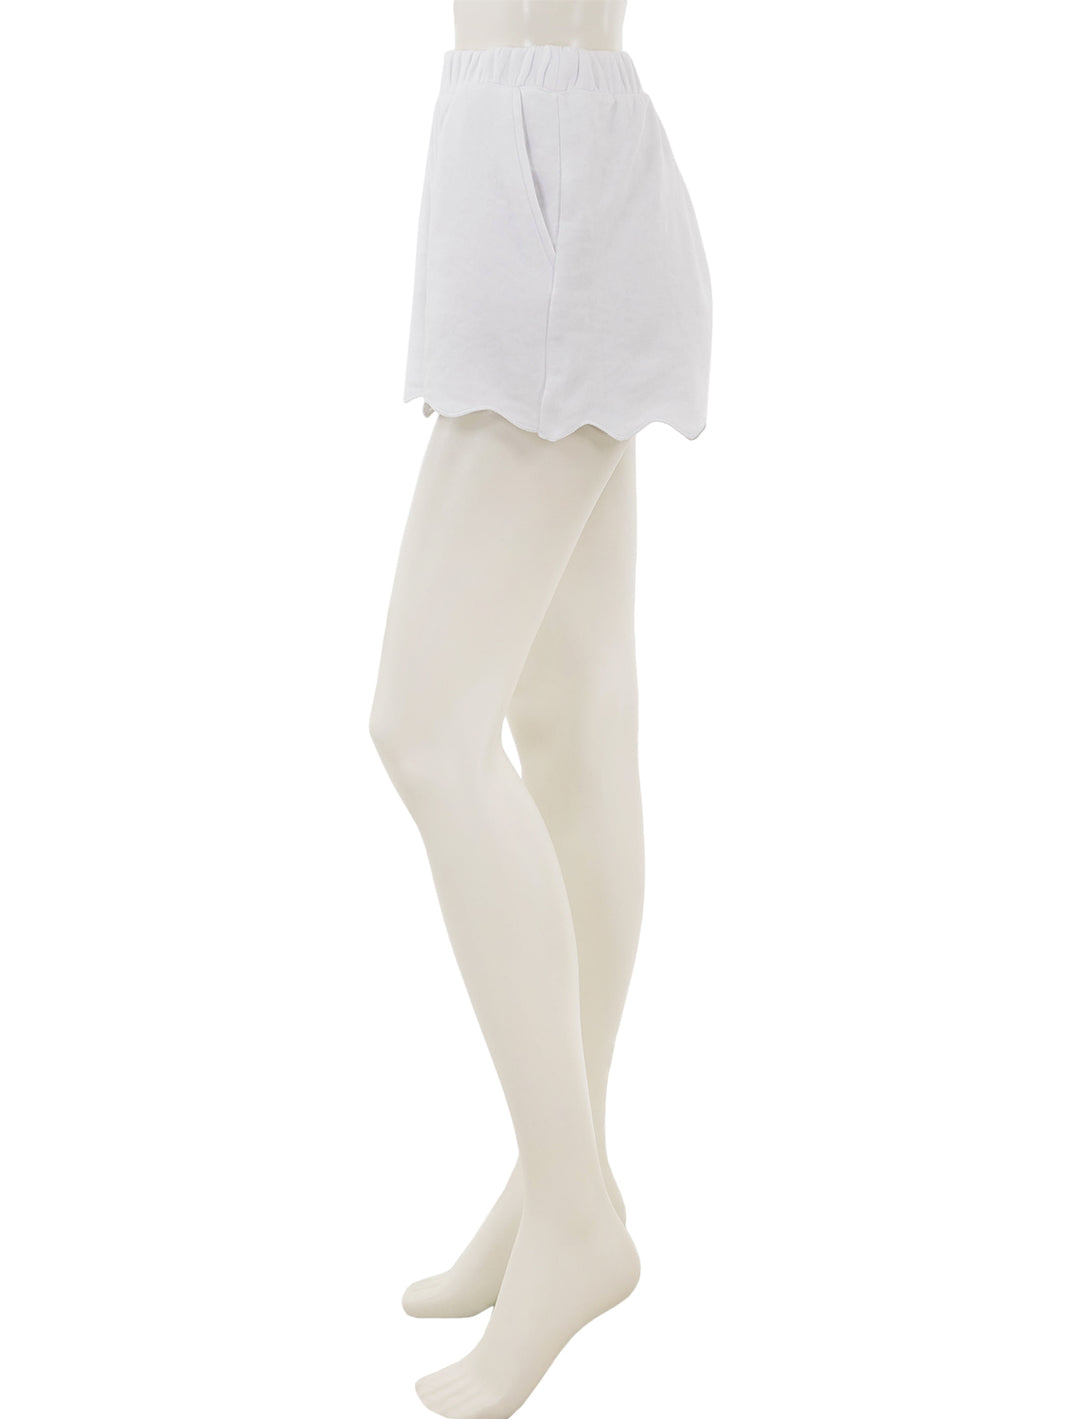 Side view of Splendid's nori scallop trim shorts in white.